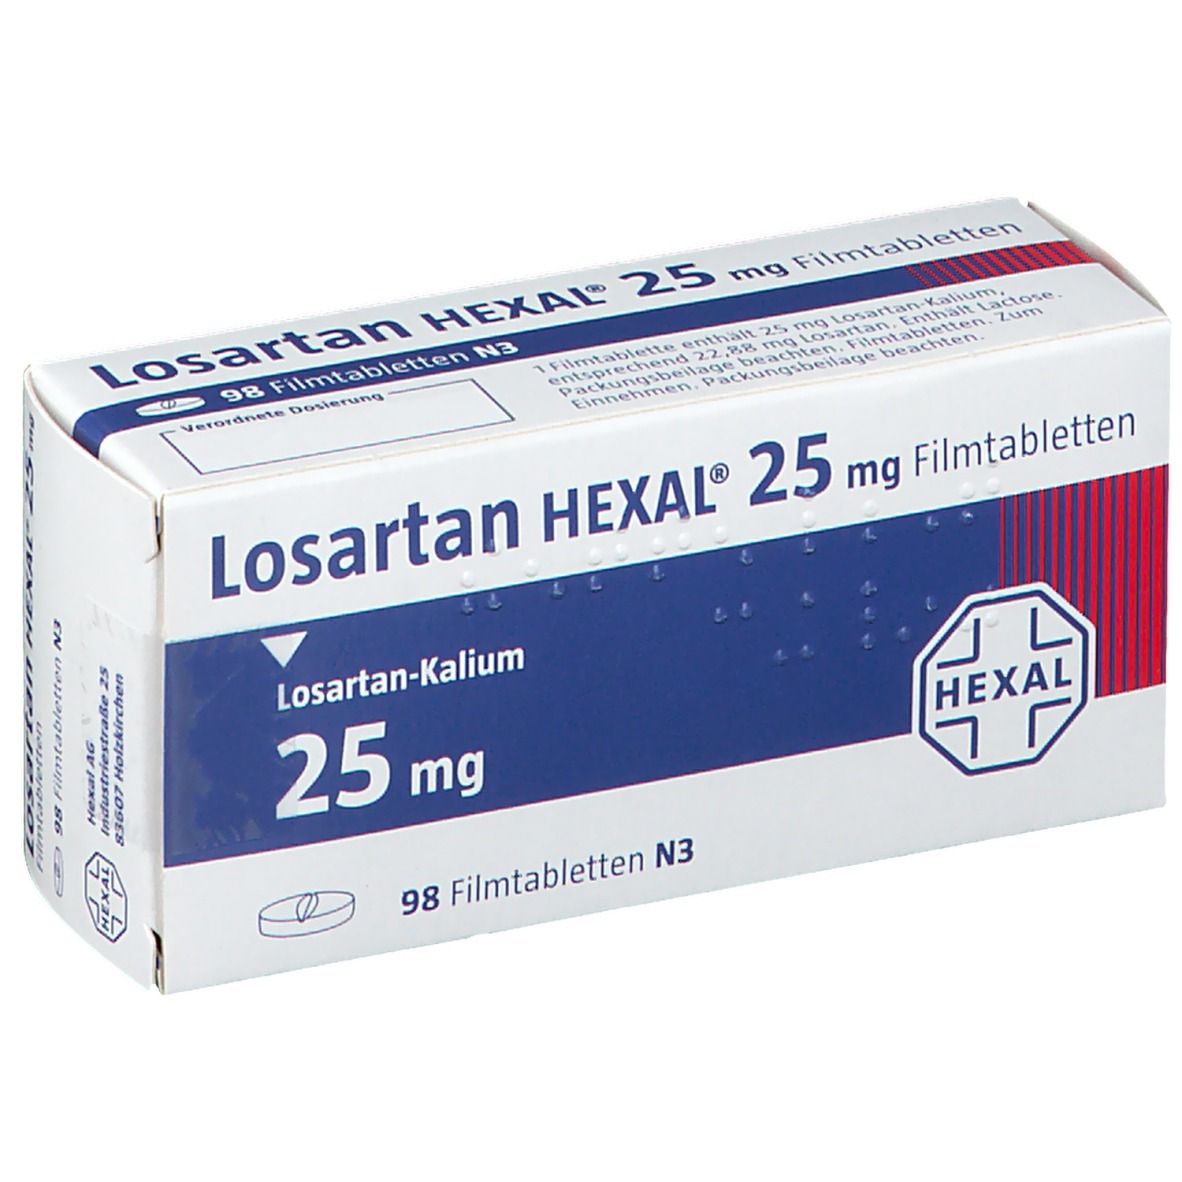 Losartan HEXAL® 25 mg